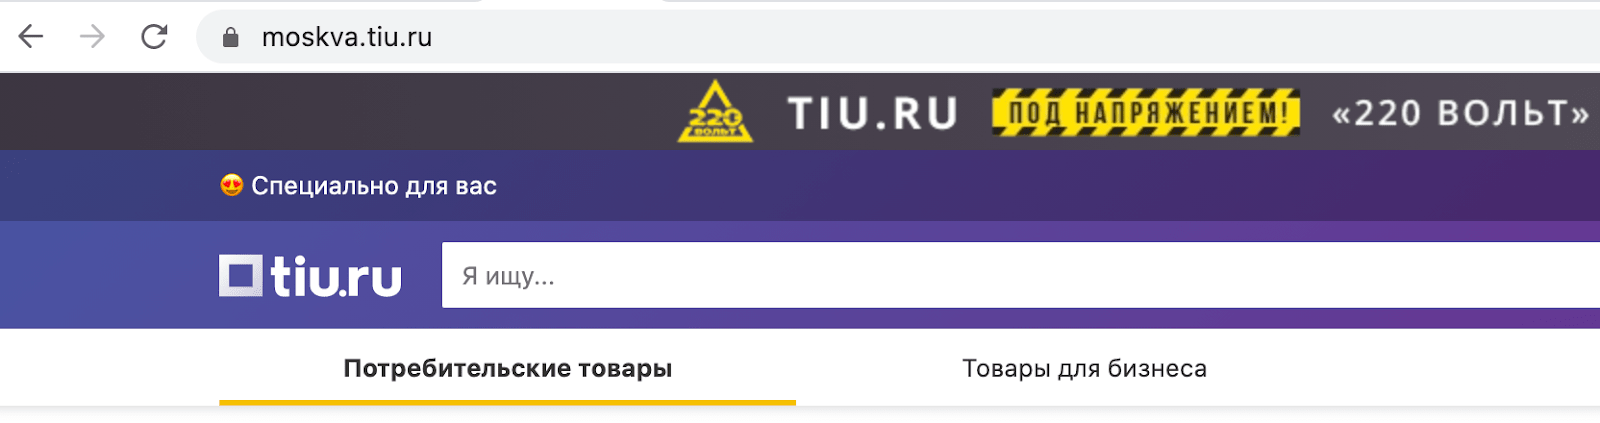 Пример поддомена сайта Тиу.ру.